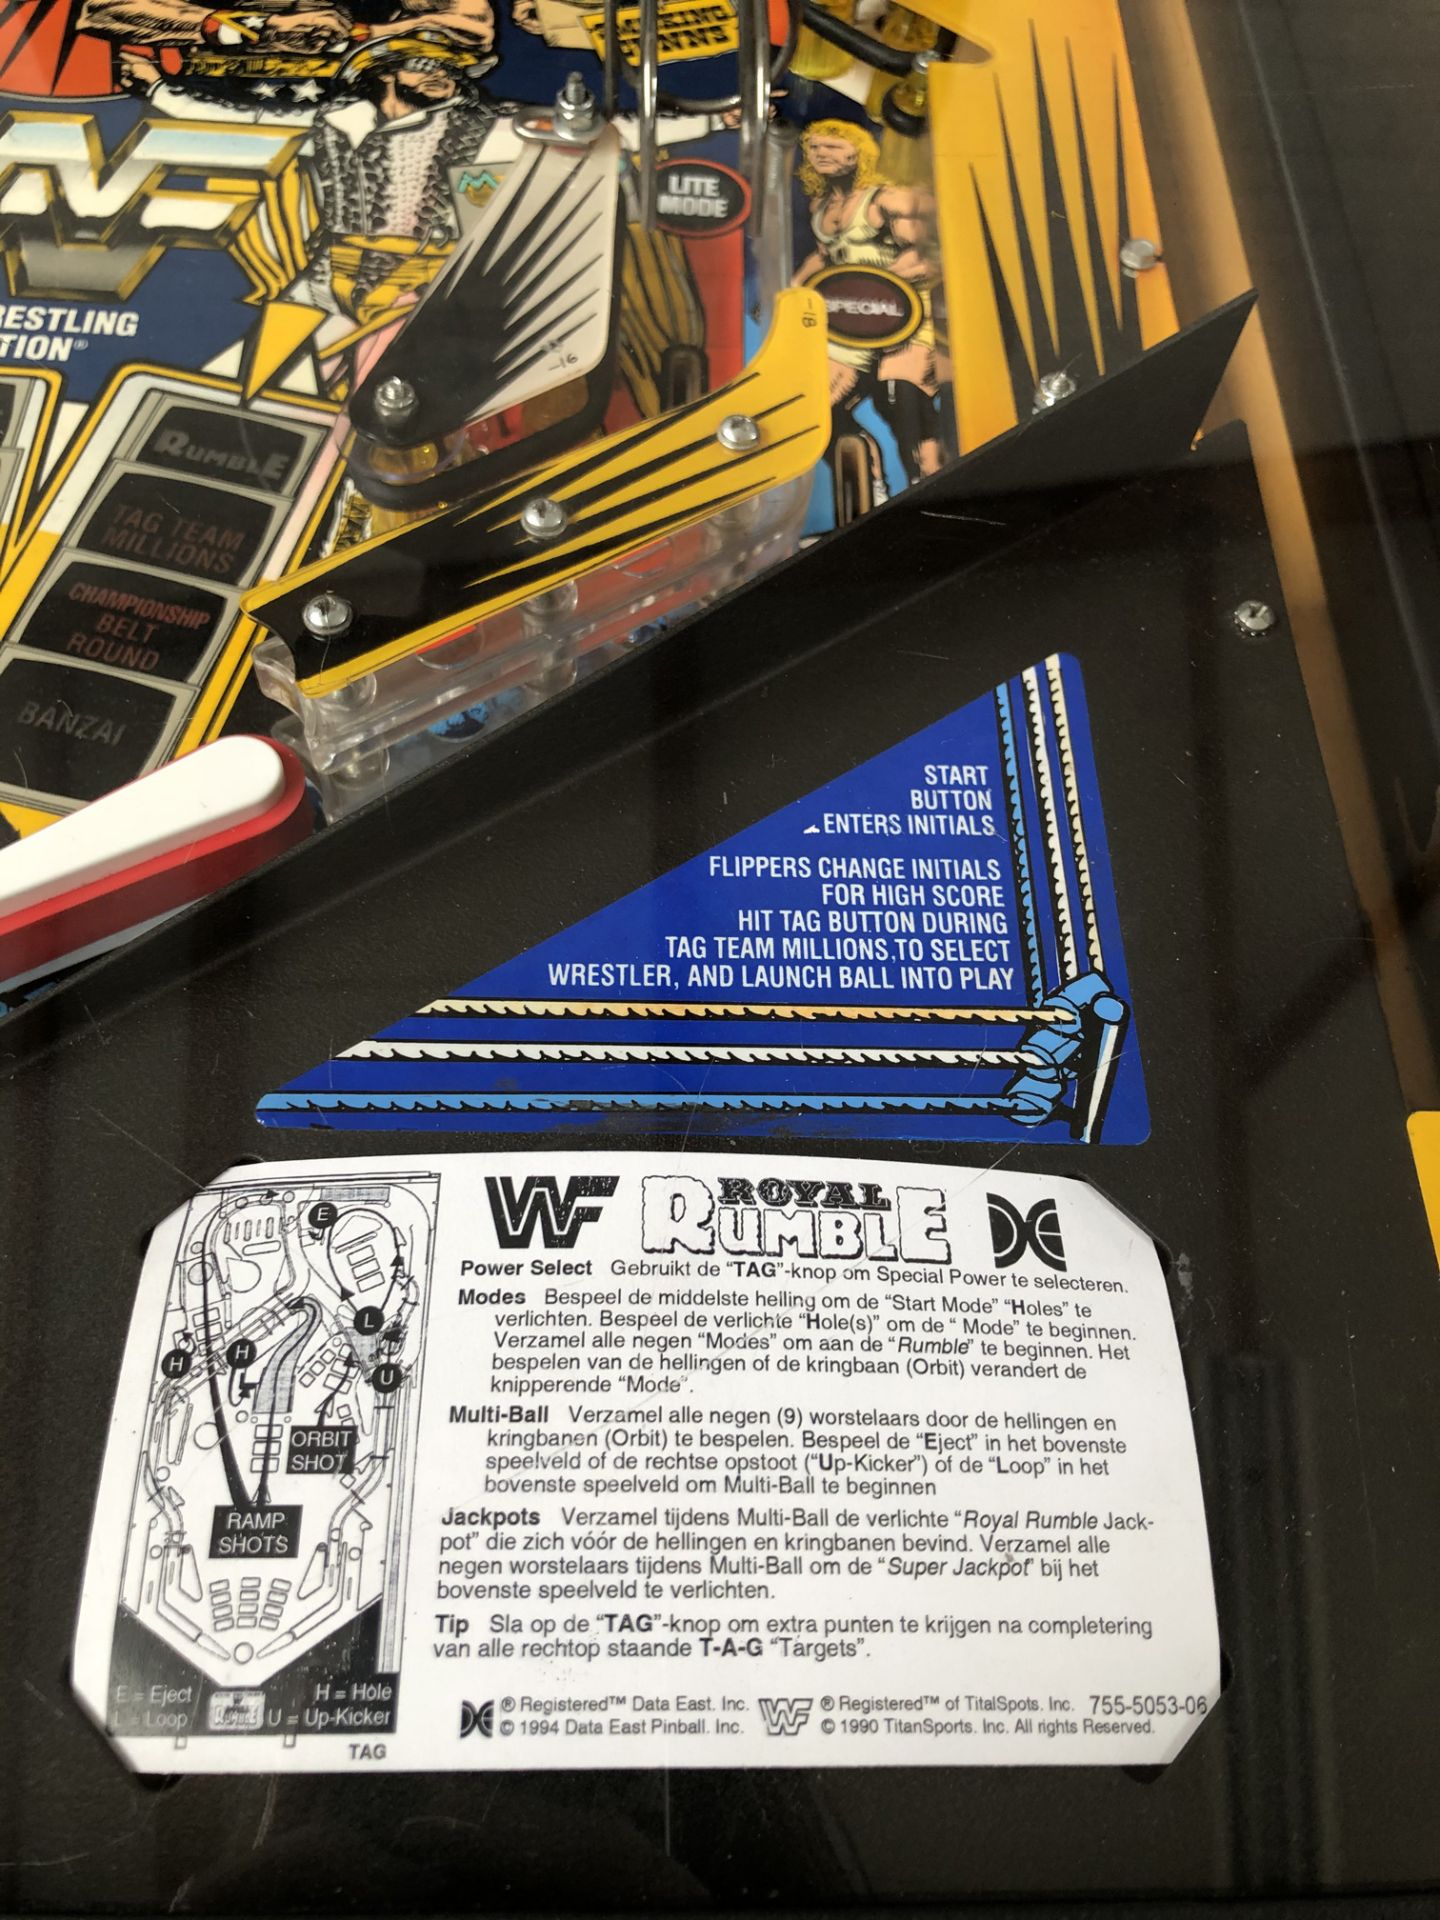 1994 WWF Royal Rumble Data East Pinball Machine  - Image 15 of 19